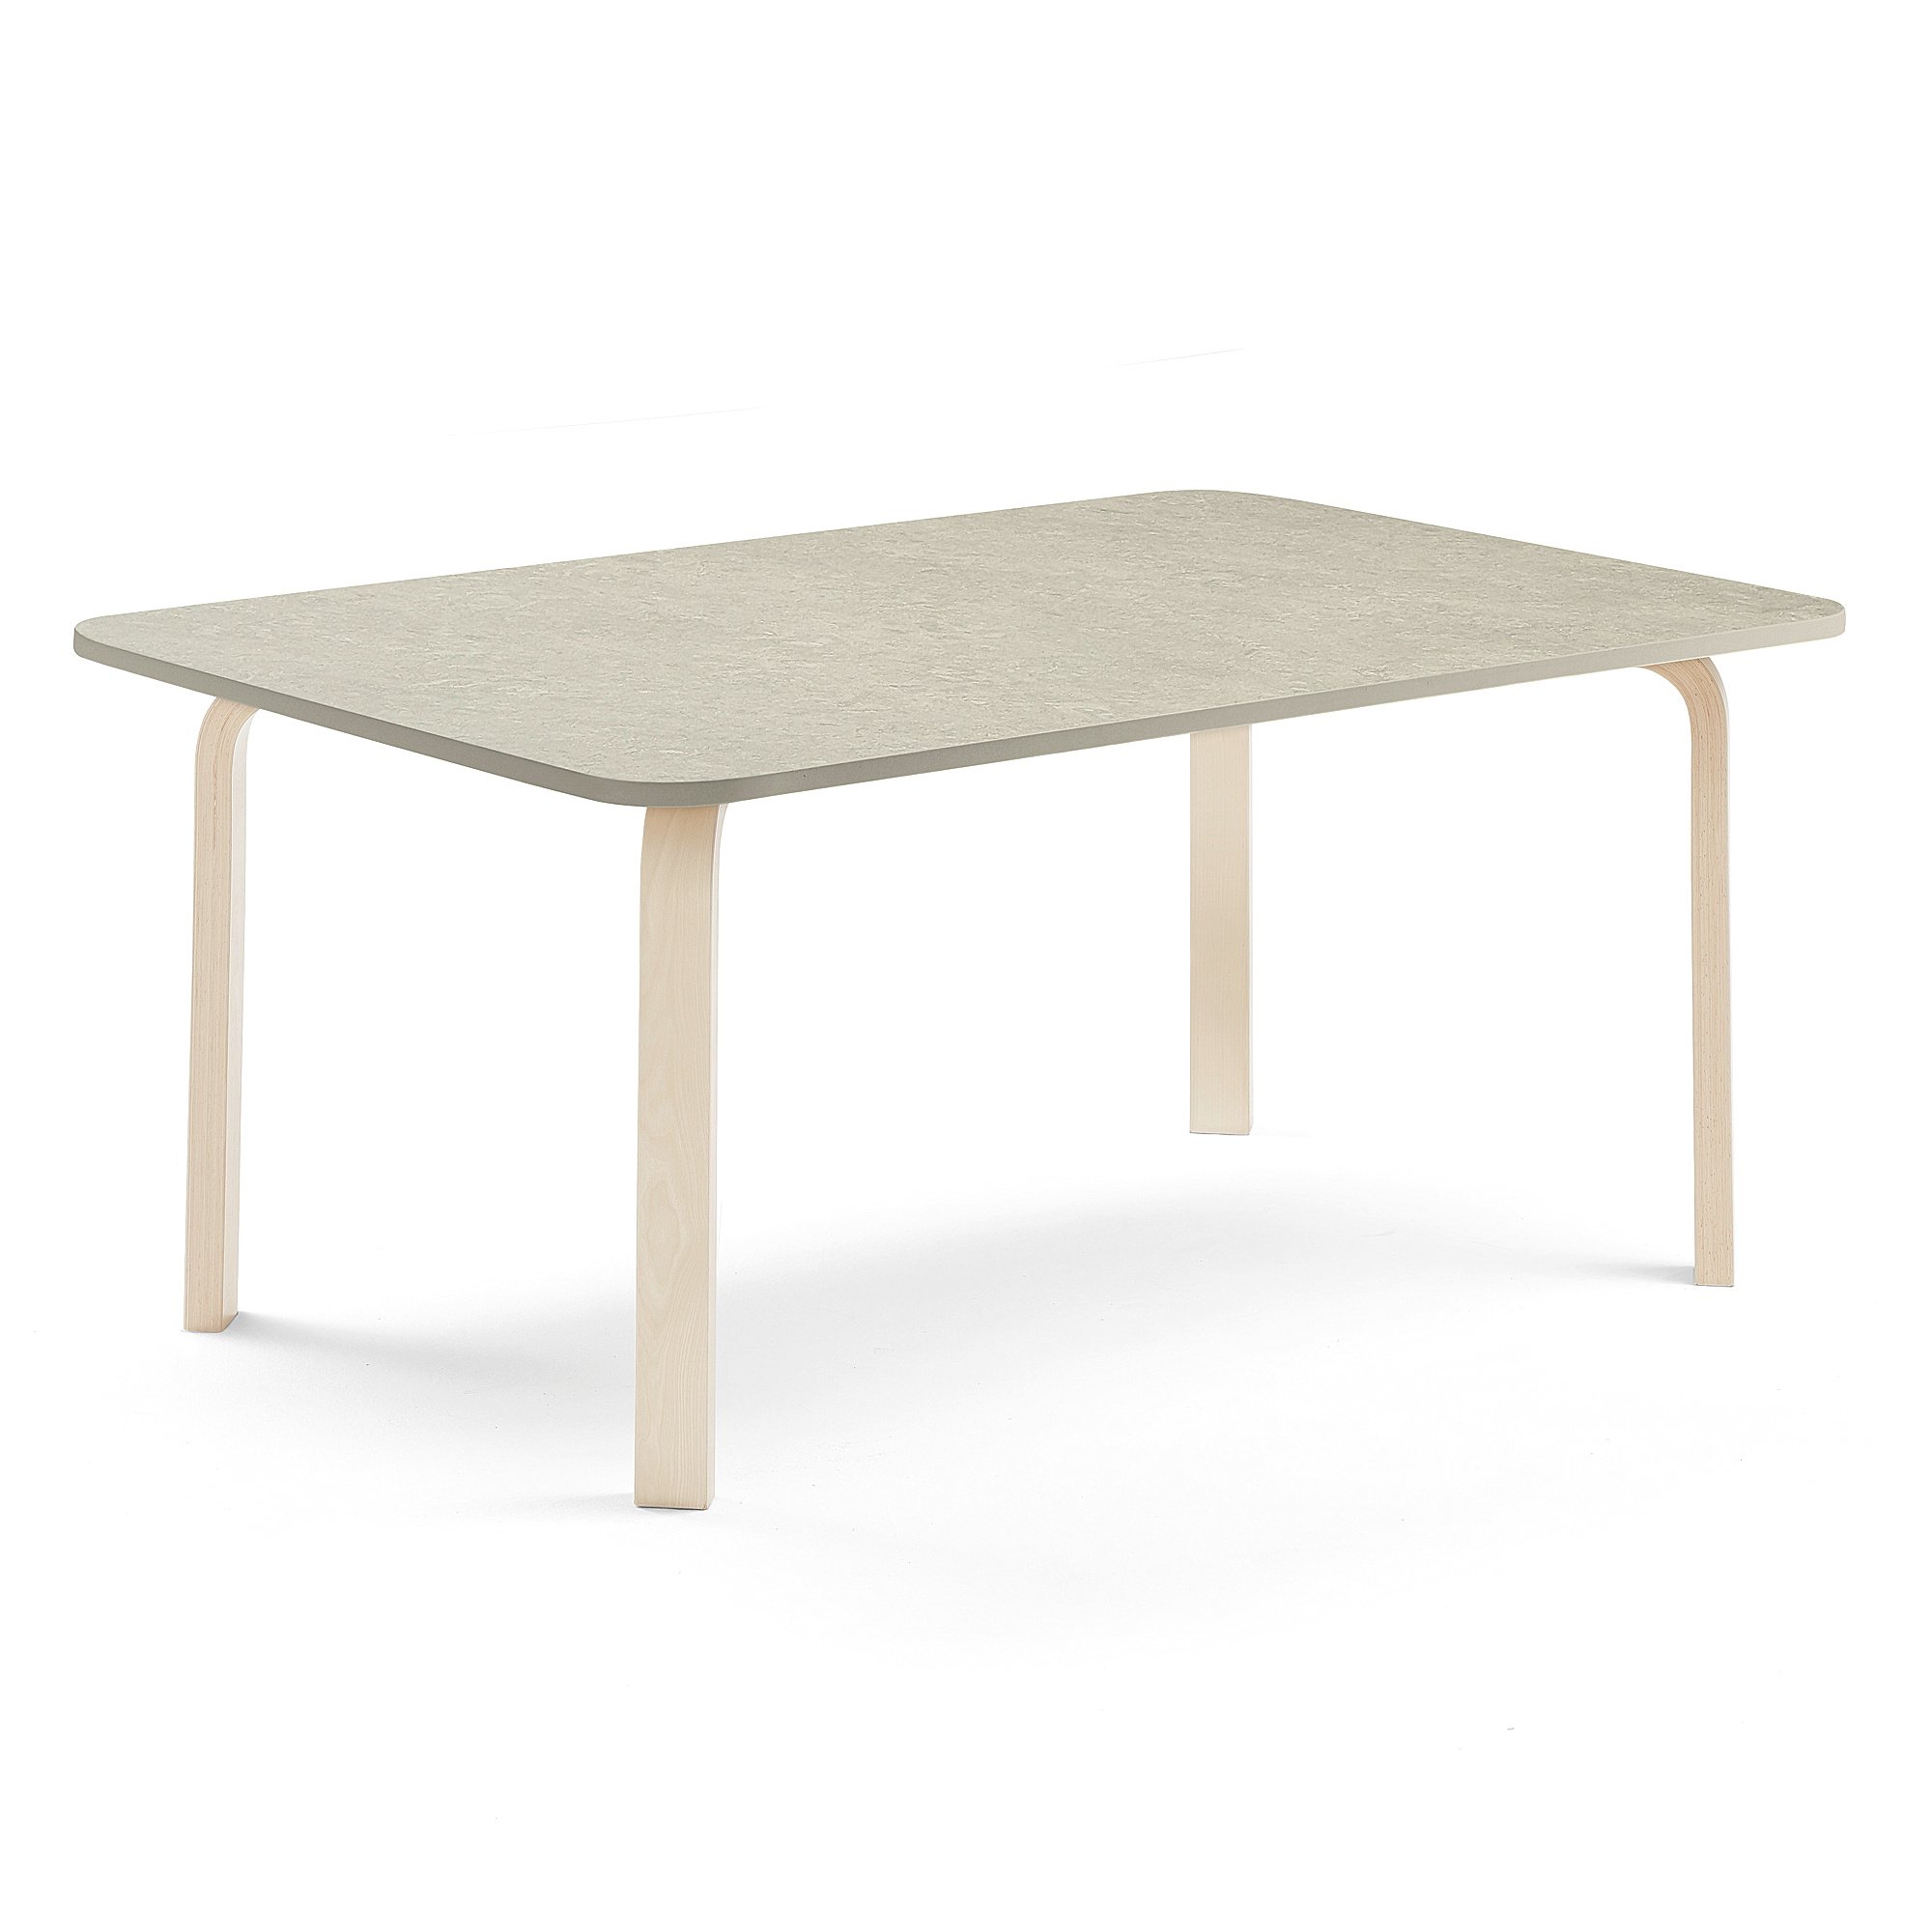 Stůl ELTON, 1800x700x590 mm, bříza, akustické linoleum, šedá